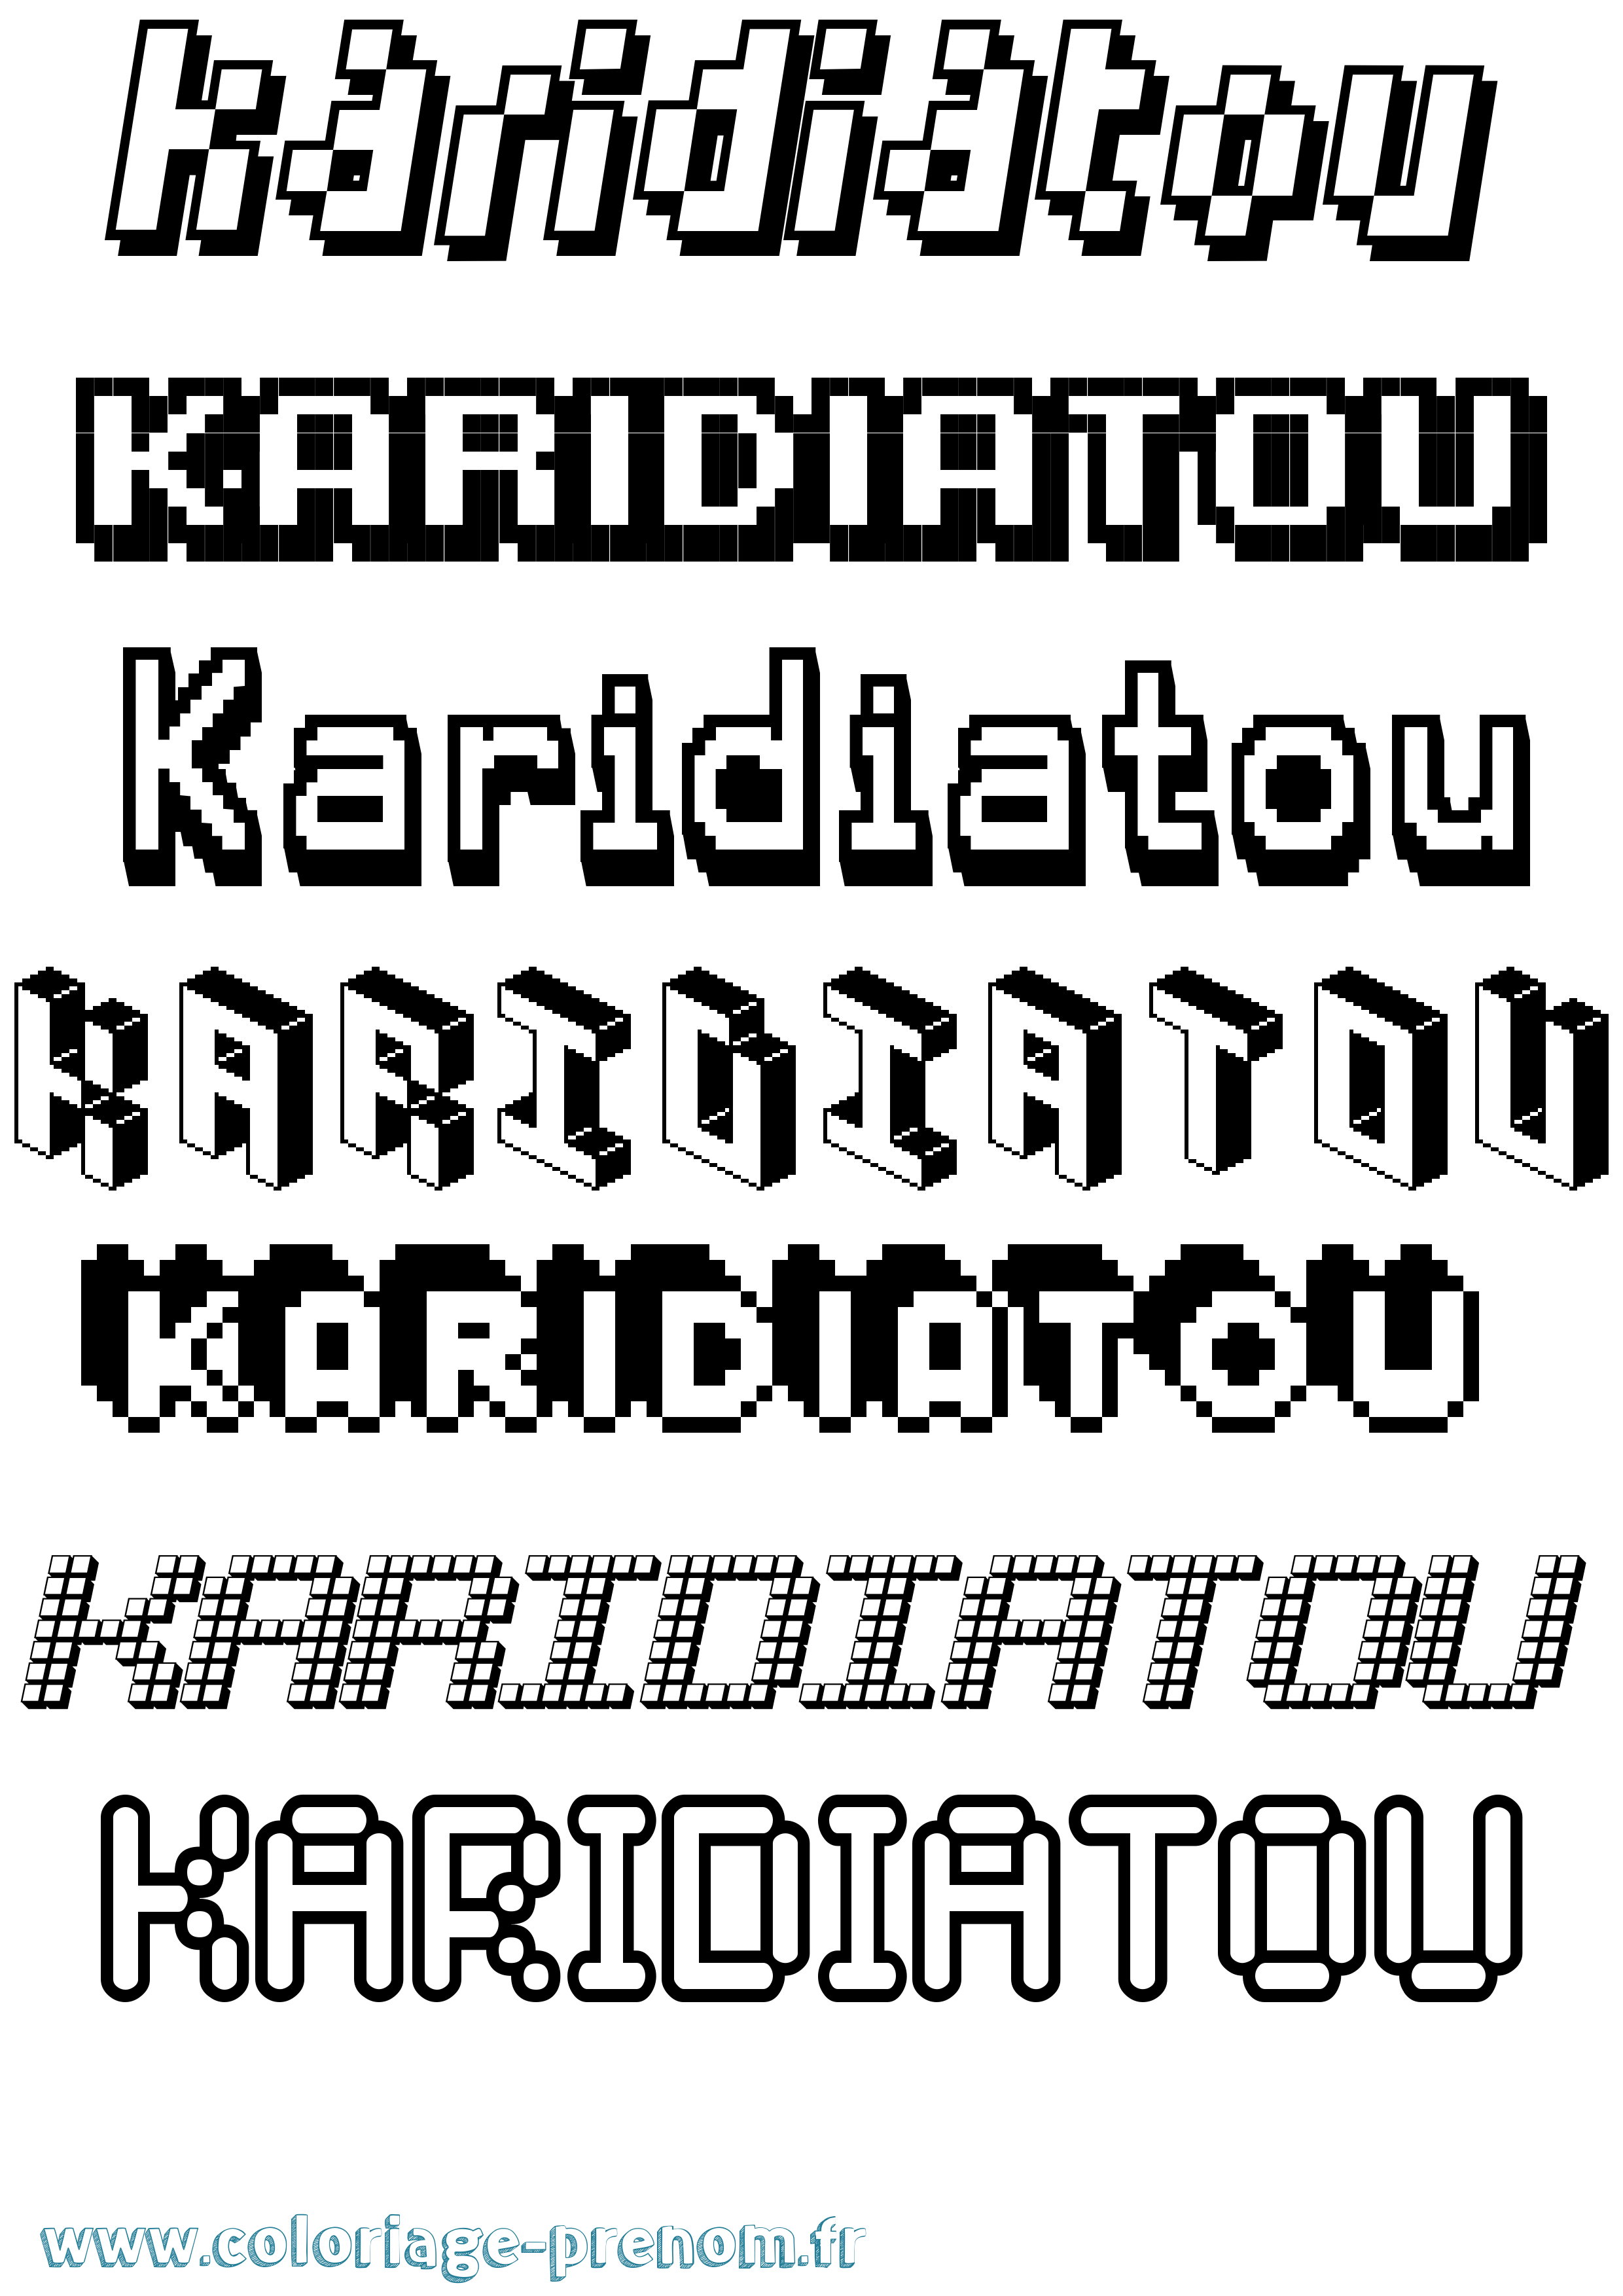 Coloriage prénom Karidiatou Pixel